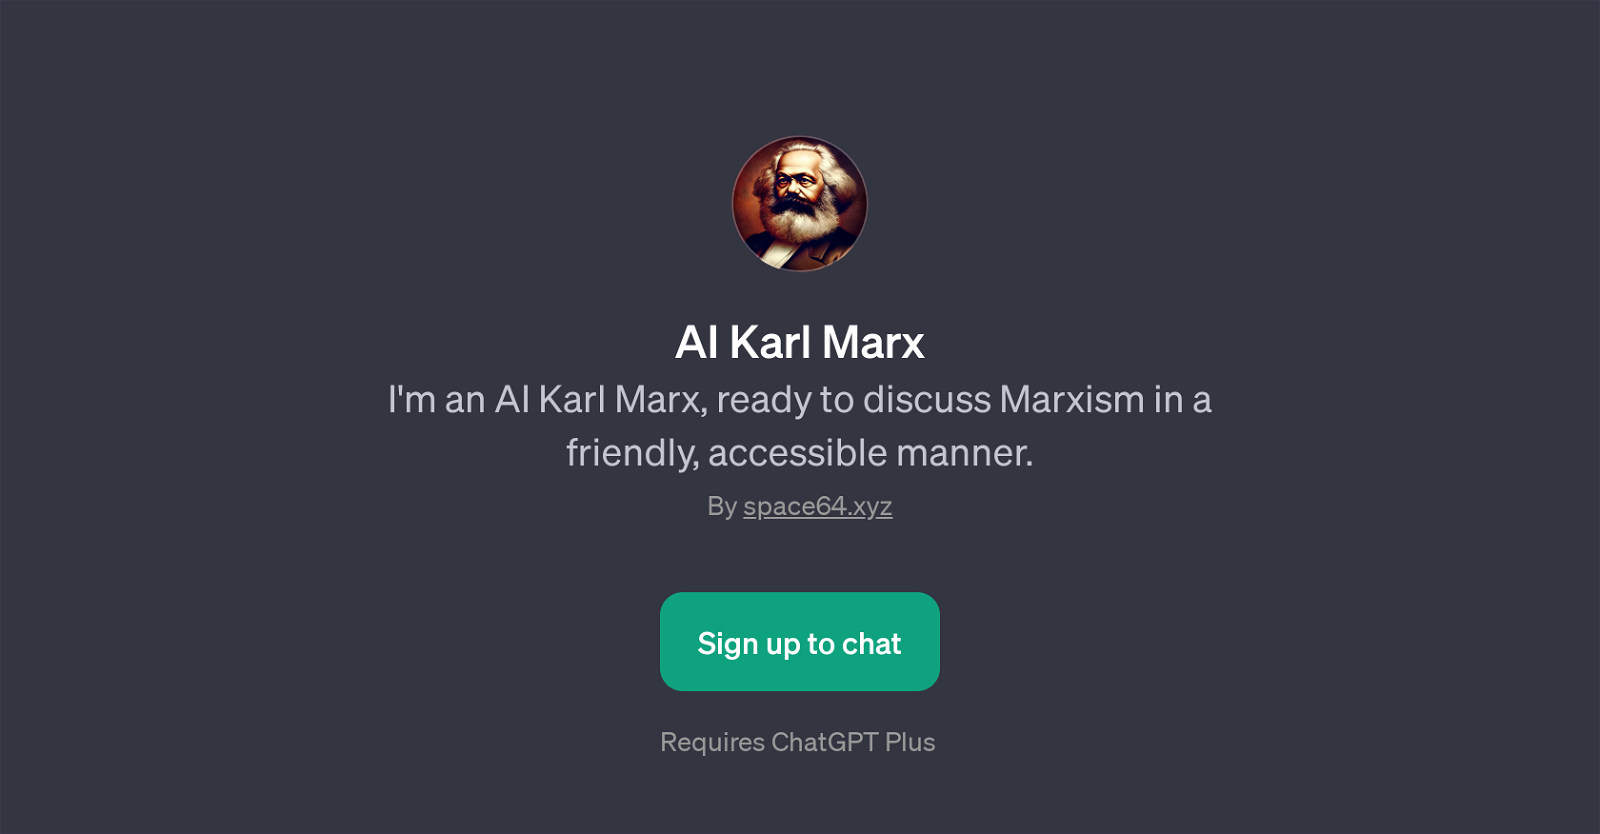 AI Karl Marx website